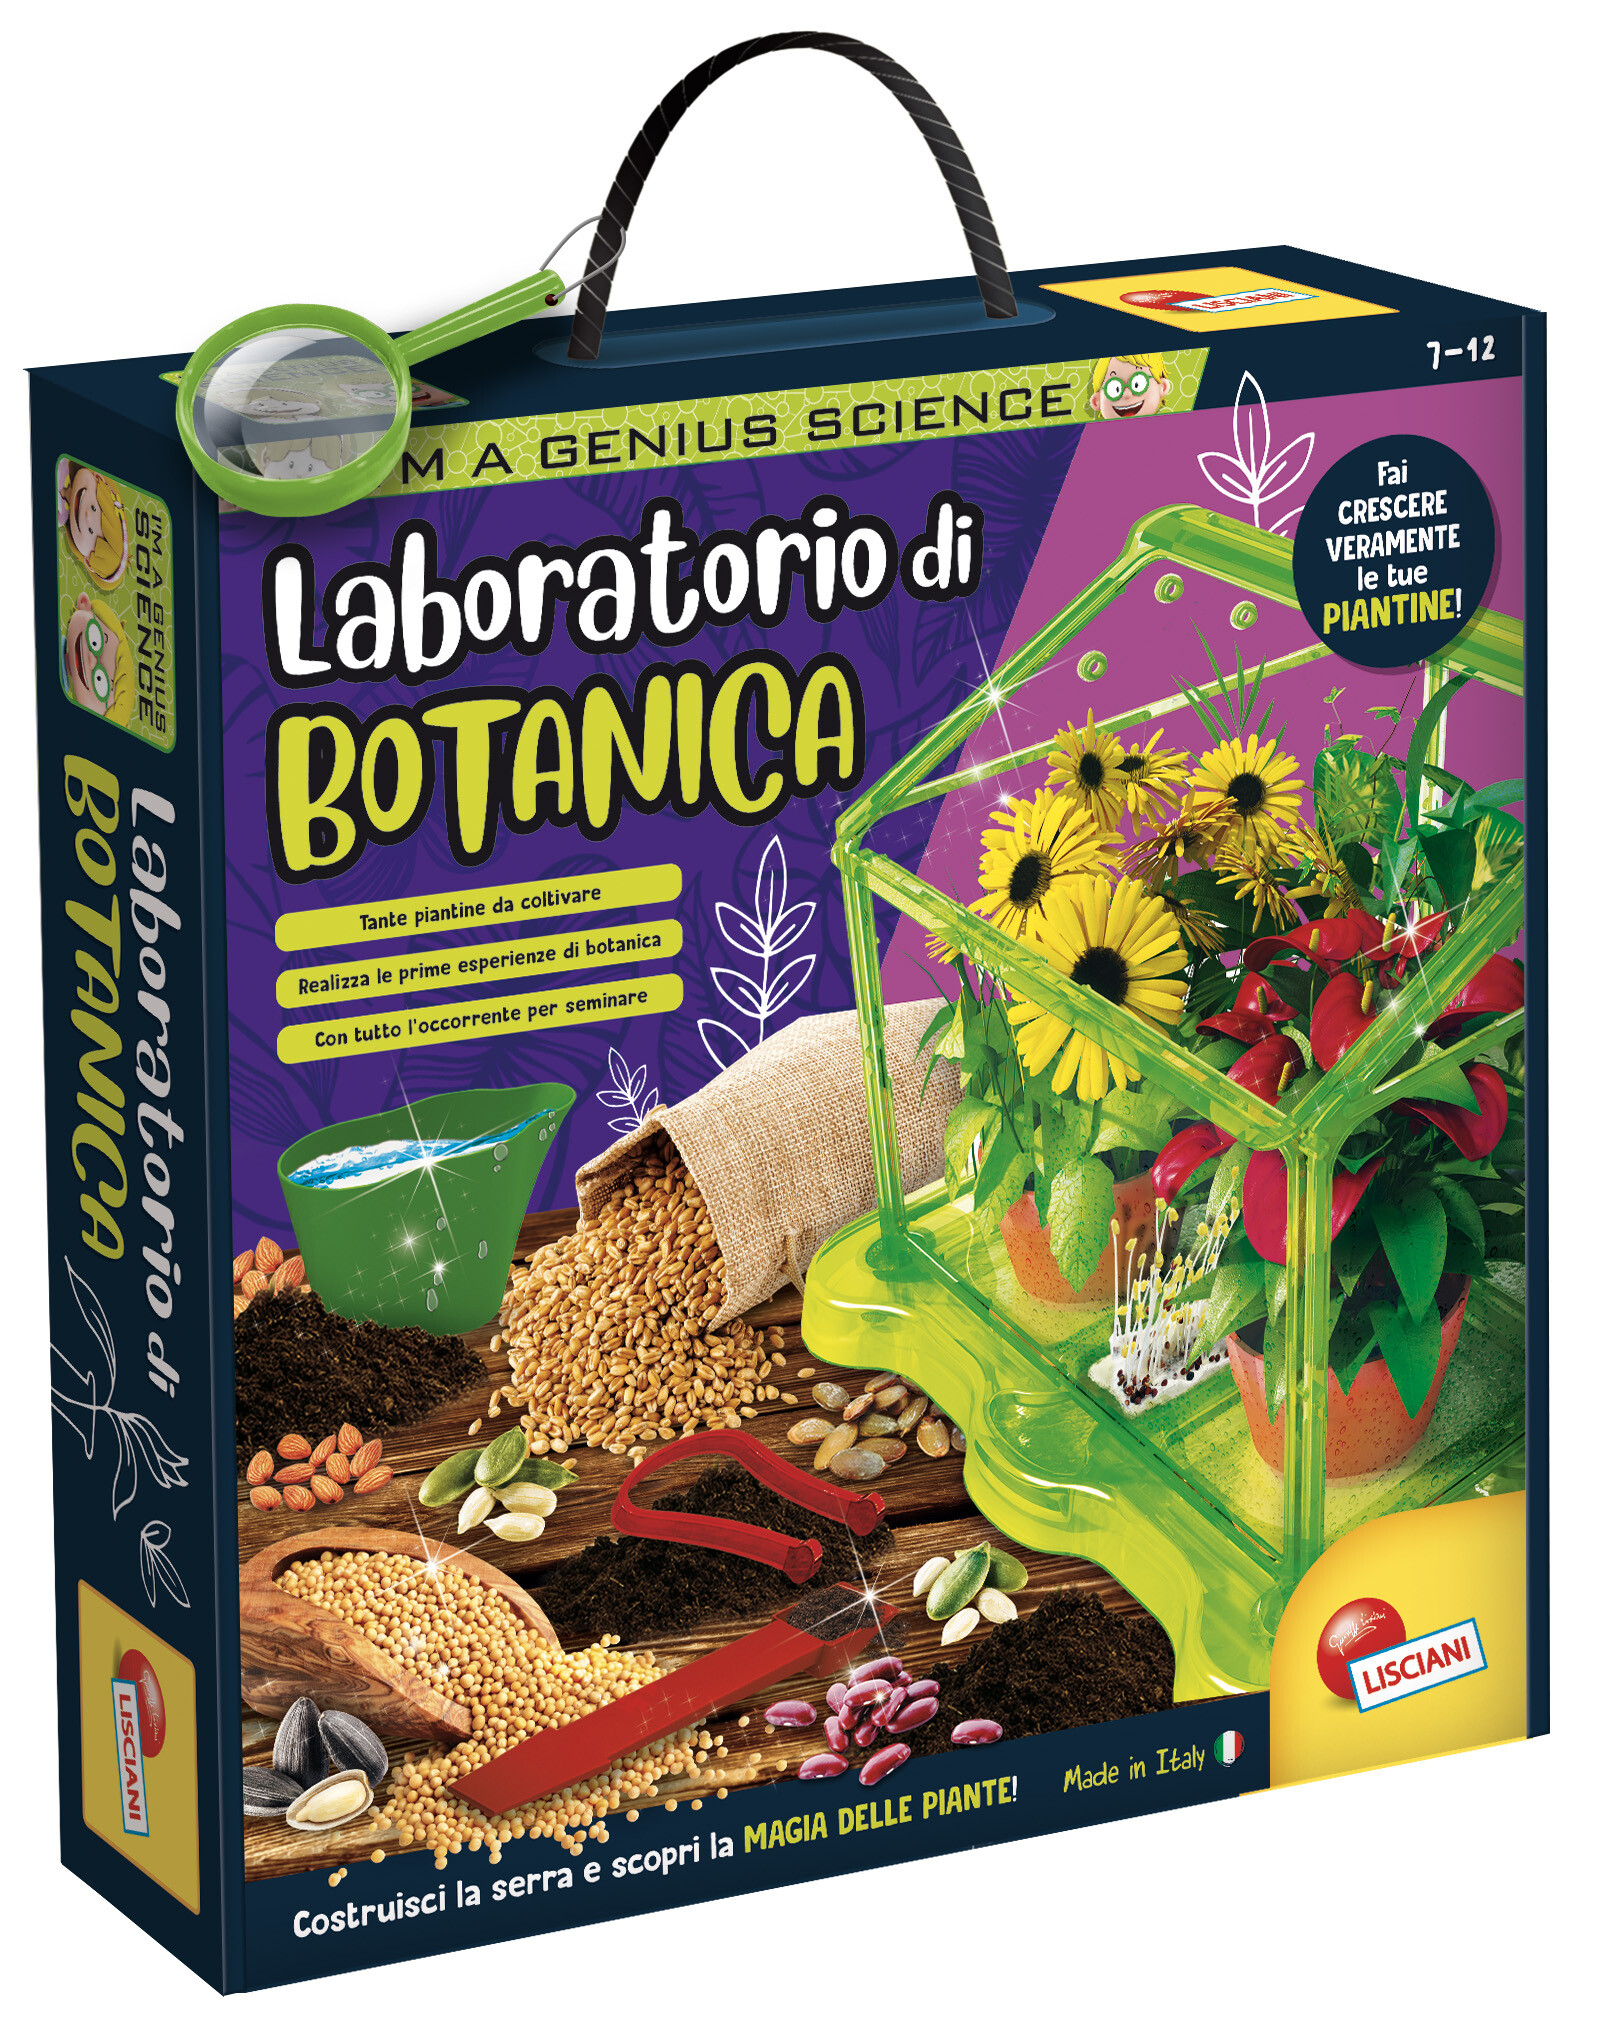 I'm a genius laboratorio di botanica - LISCIANI